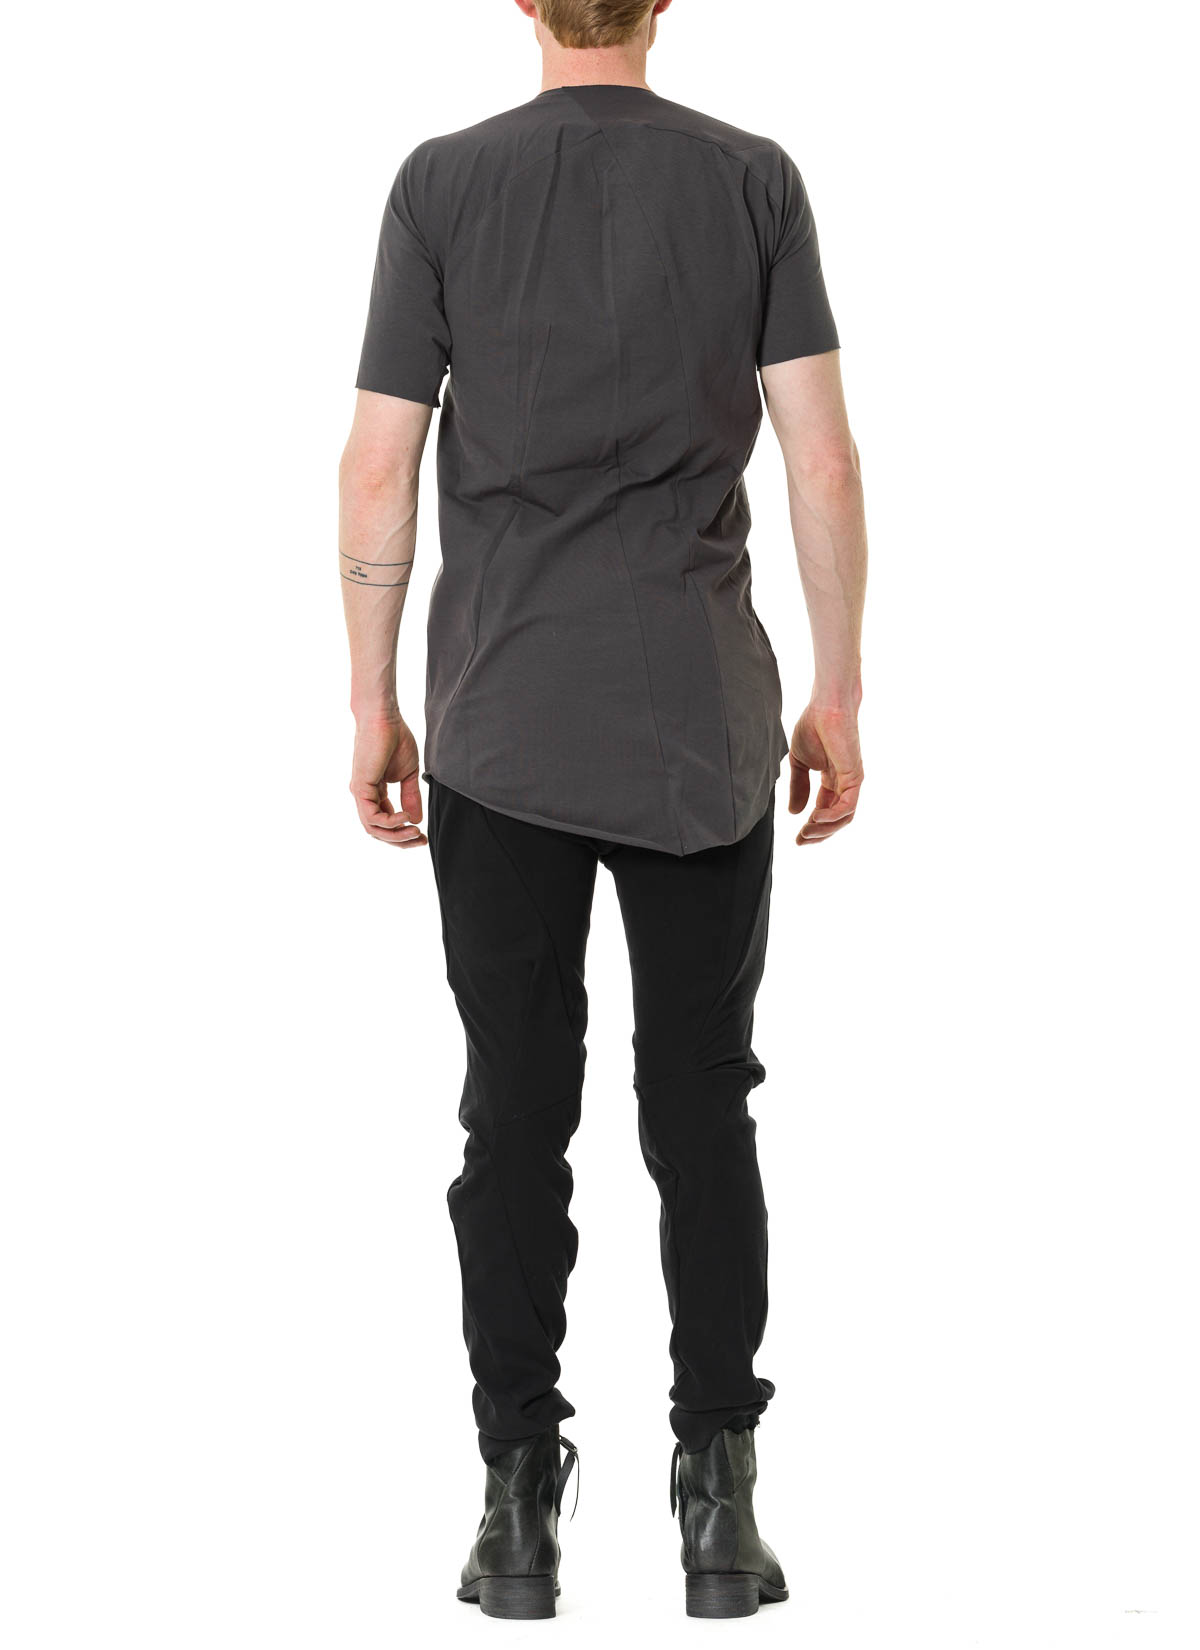 hide-m | LEON EMANUEL BLANCK Distortion Curved T-Shirt, grey cotton